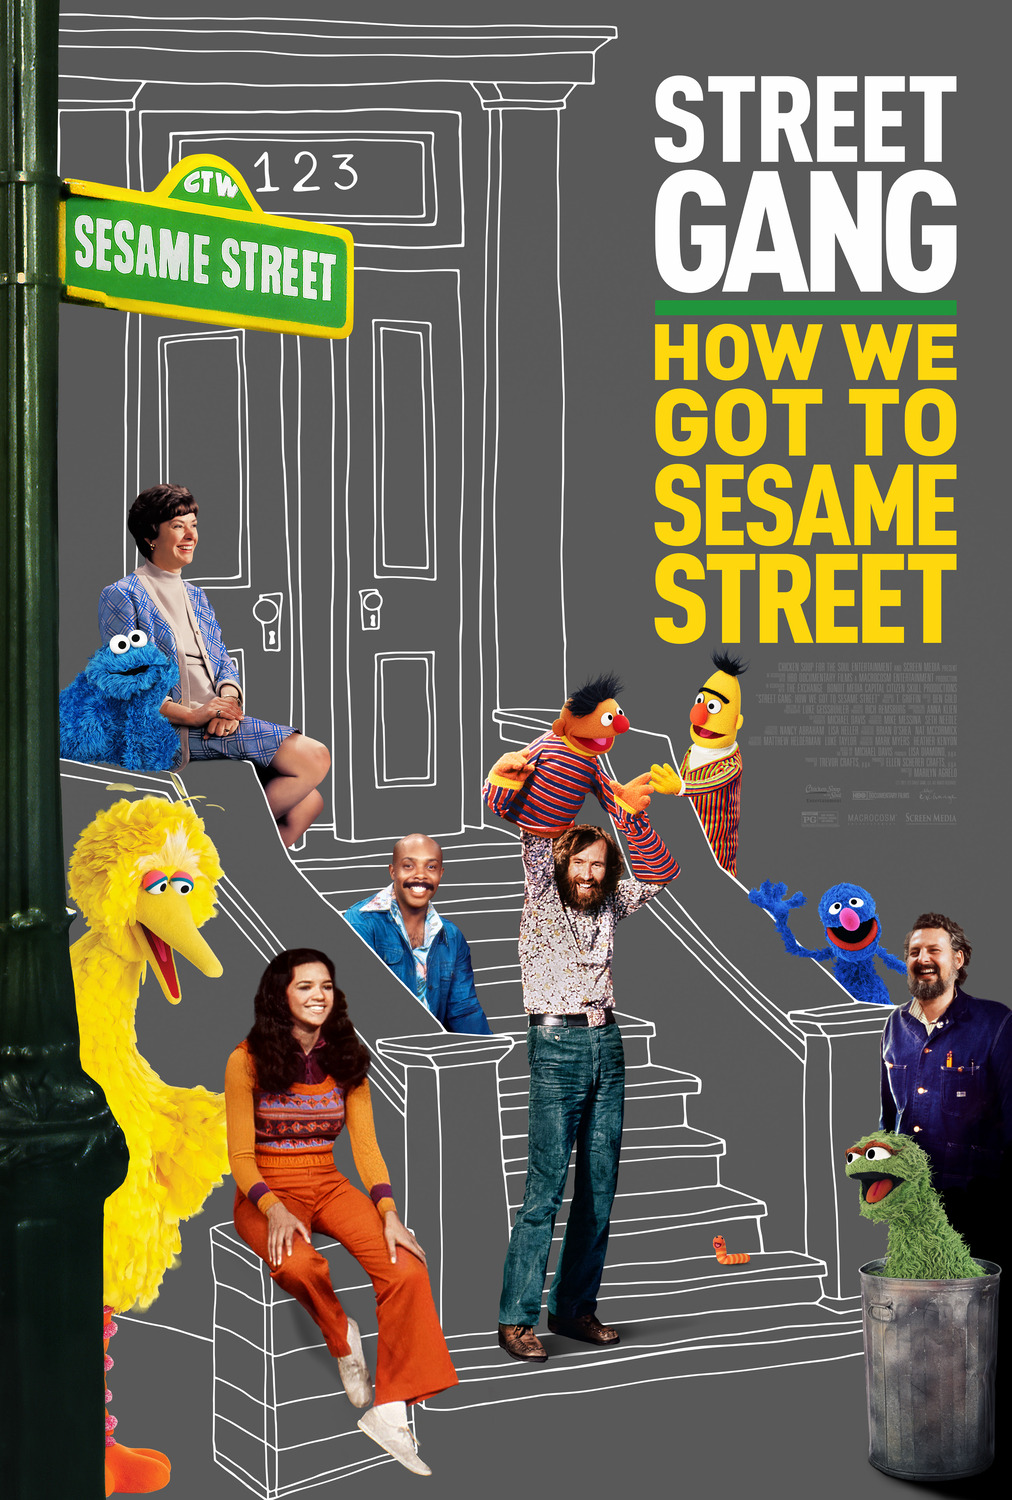 Street Gang How We Got to Sesame Street.jpg